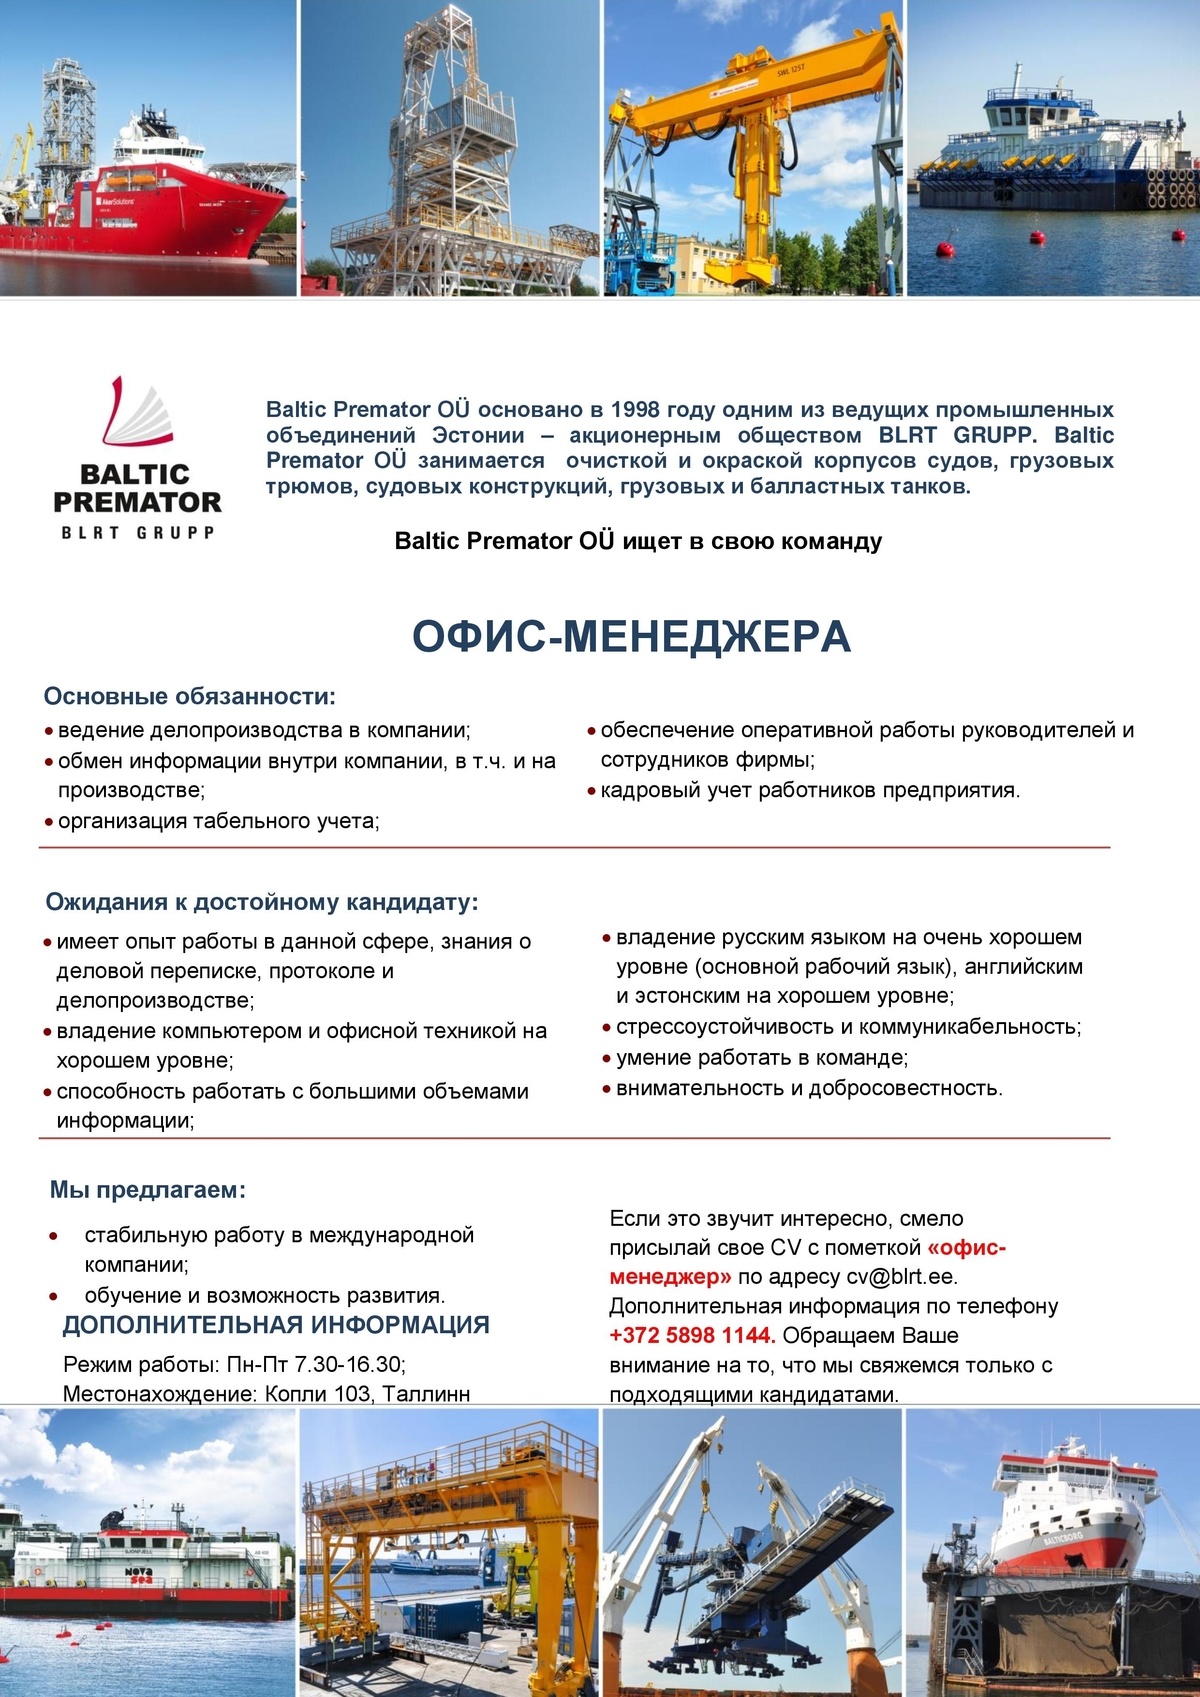 Baltic Premator OÜ Офис-менеджер